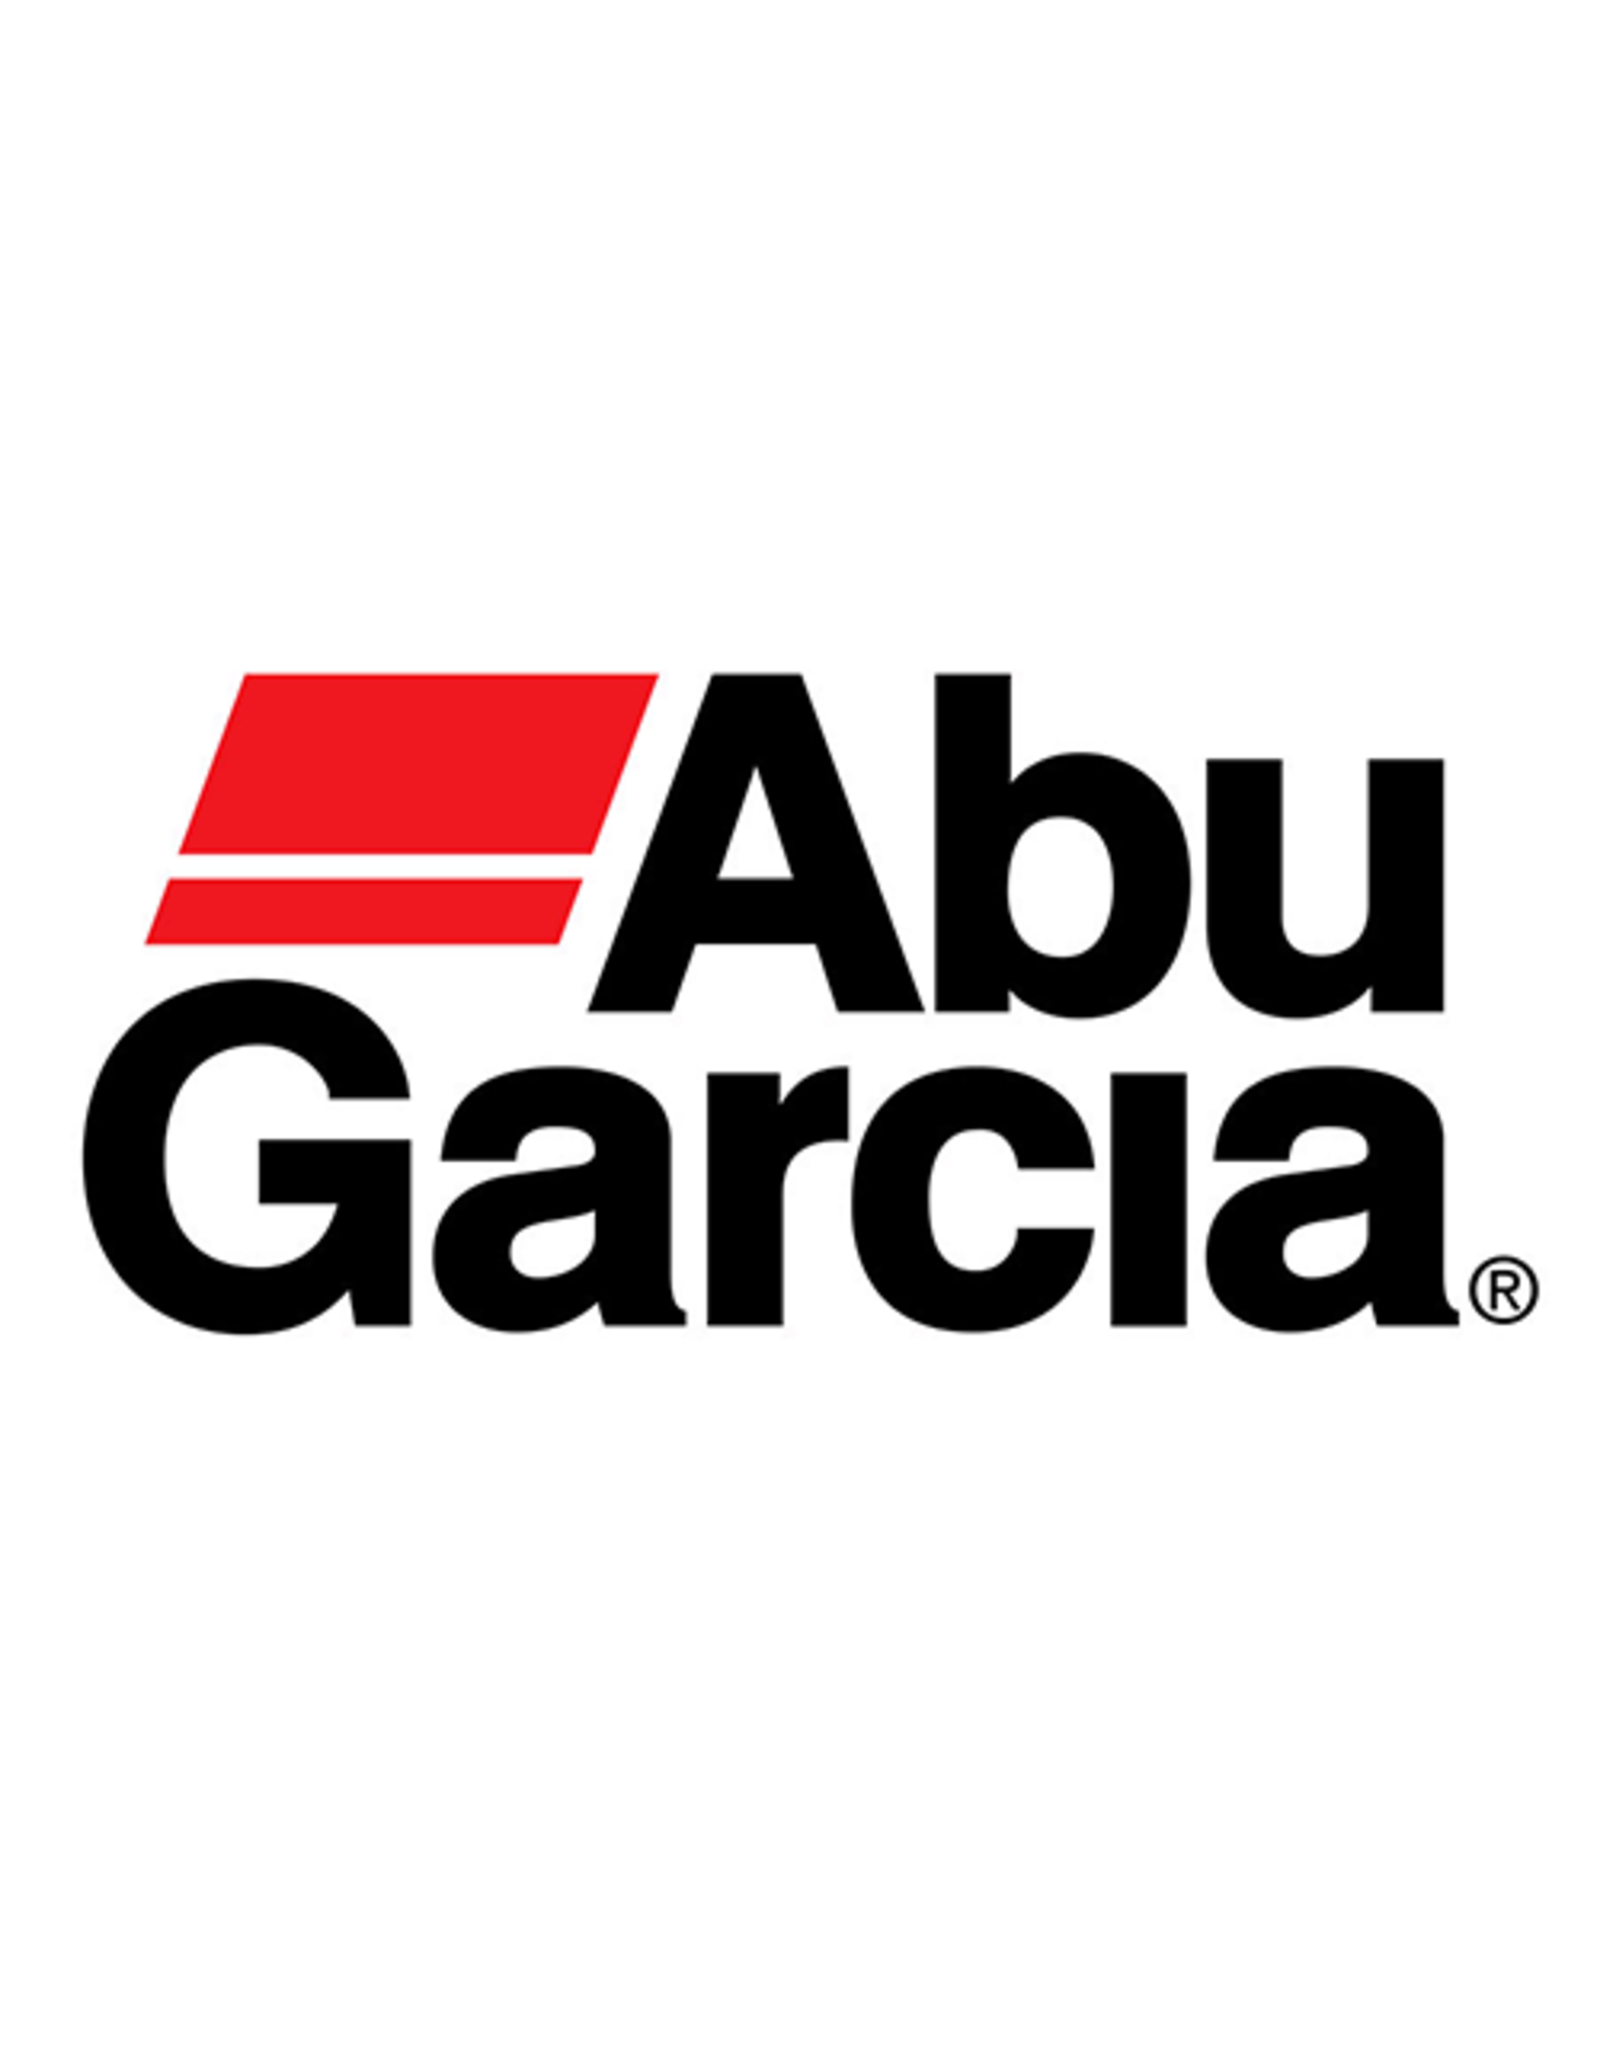 Abu Garcia 6986  BREAK BLOCK HUB